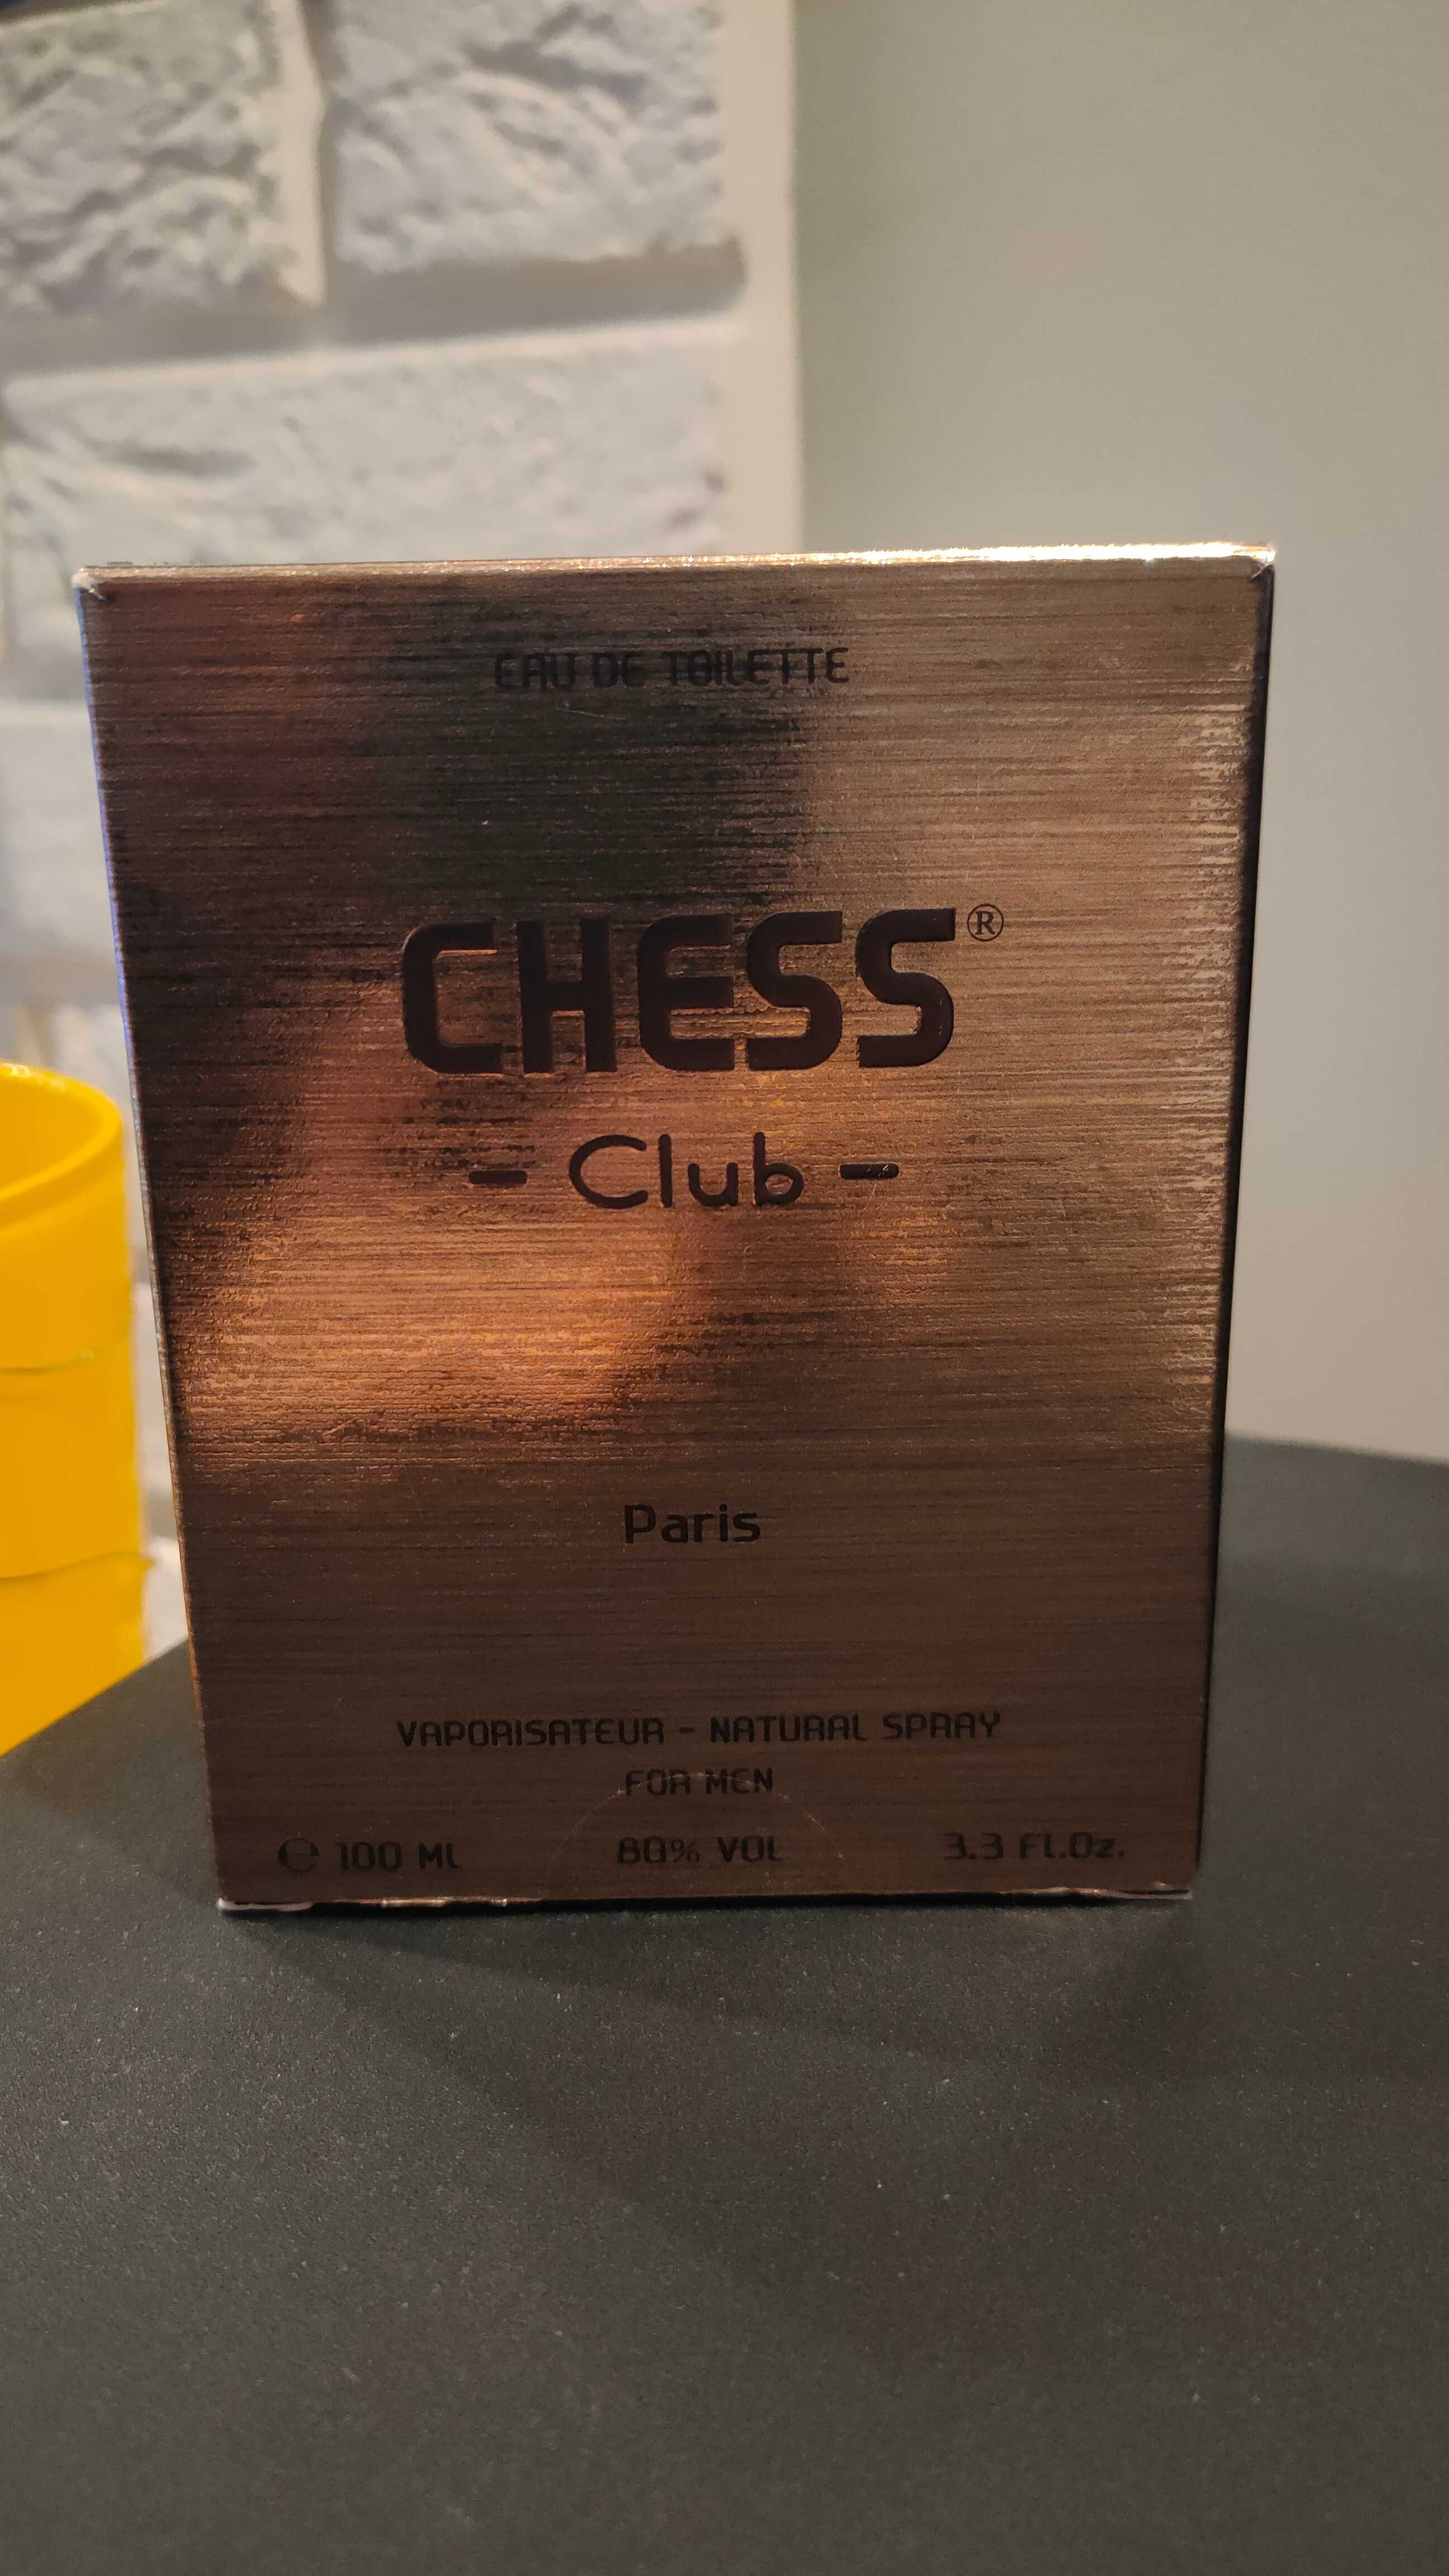 Unikat Chess Club Yves de Sistelle - 100 ml.